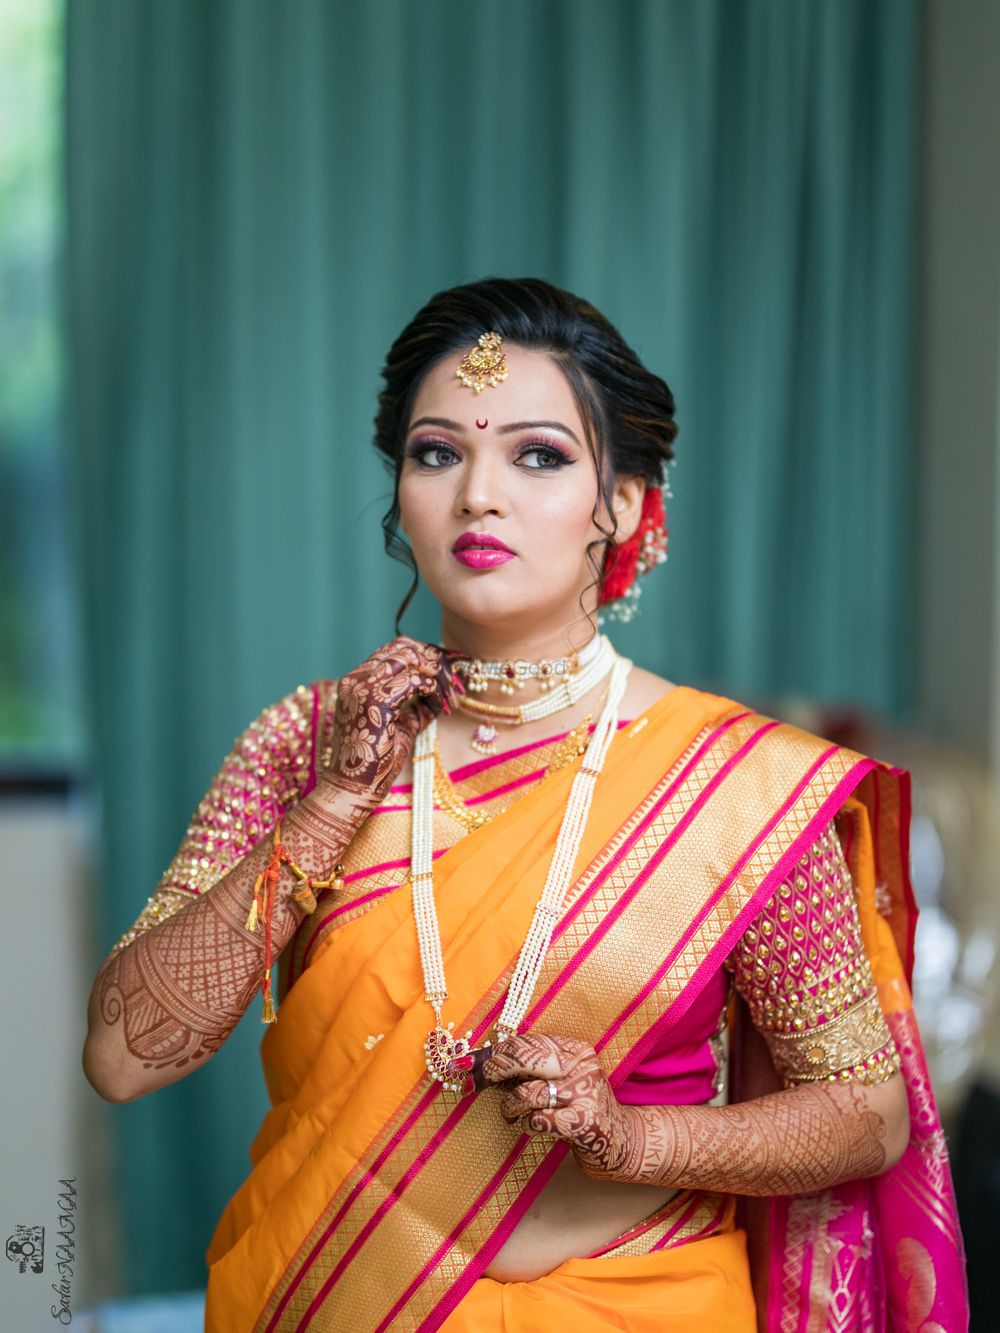 Photo of Marathi bride wearing an orange saree with a pink blouse.